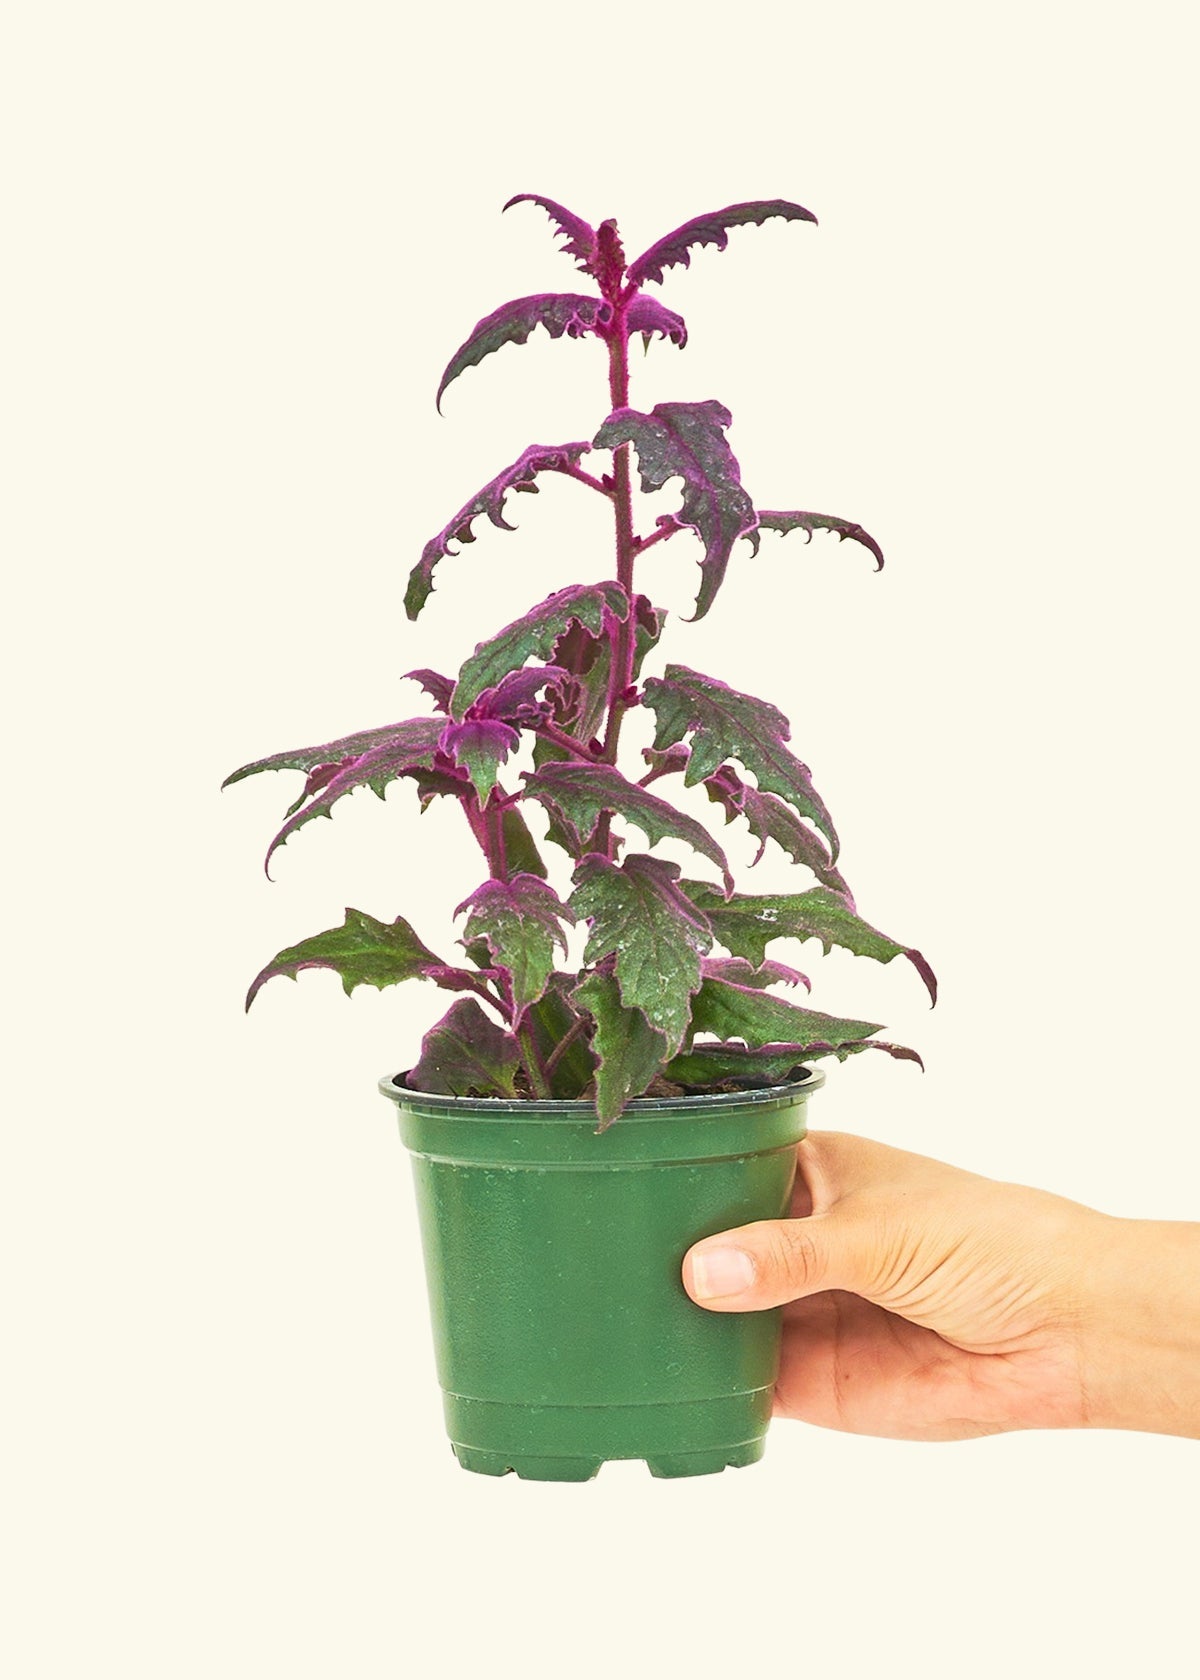 Small Purple Passion Plant (Gynura aurantiaca) in a grow pot.